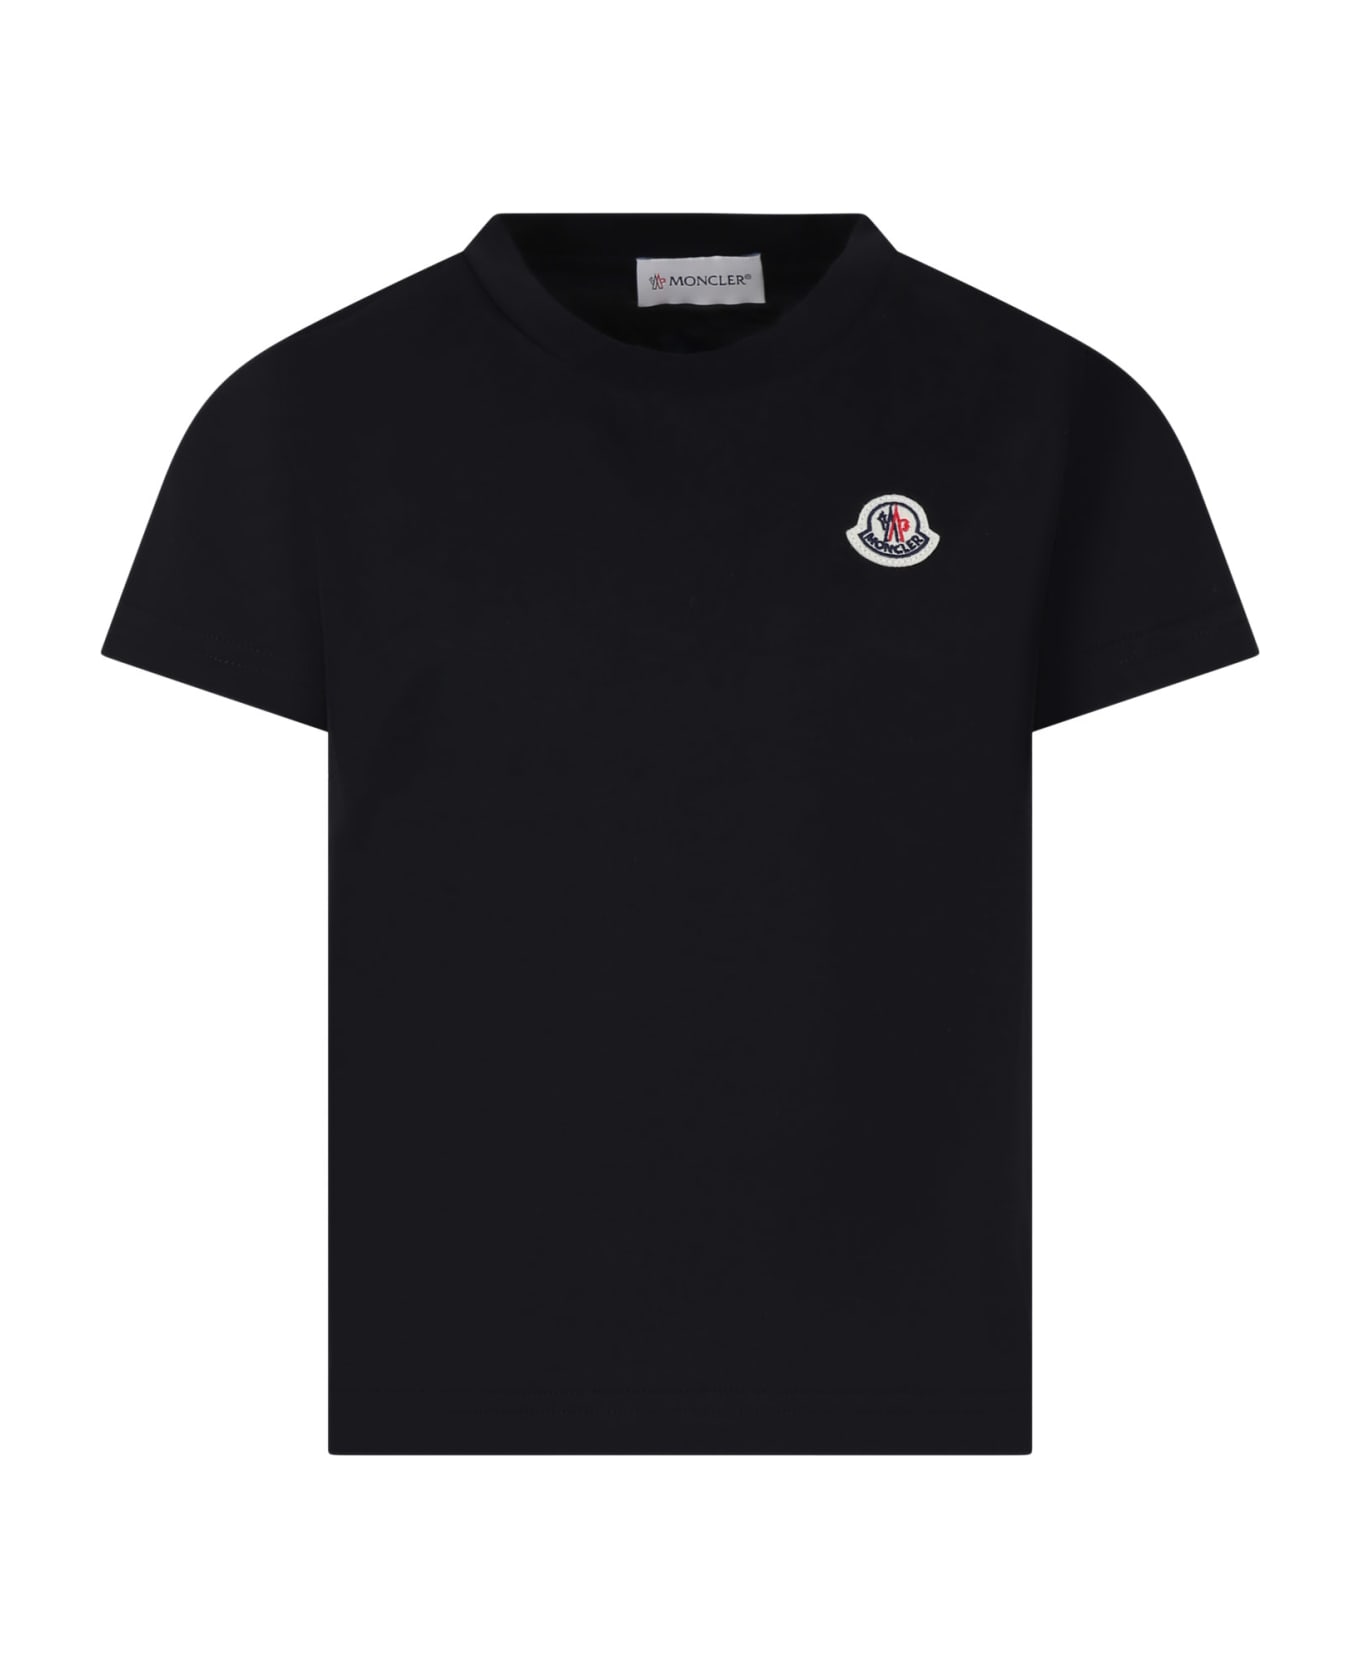 Moncler Black T-shirt For Kids With Logo - Black